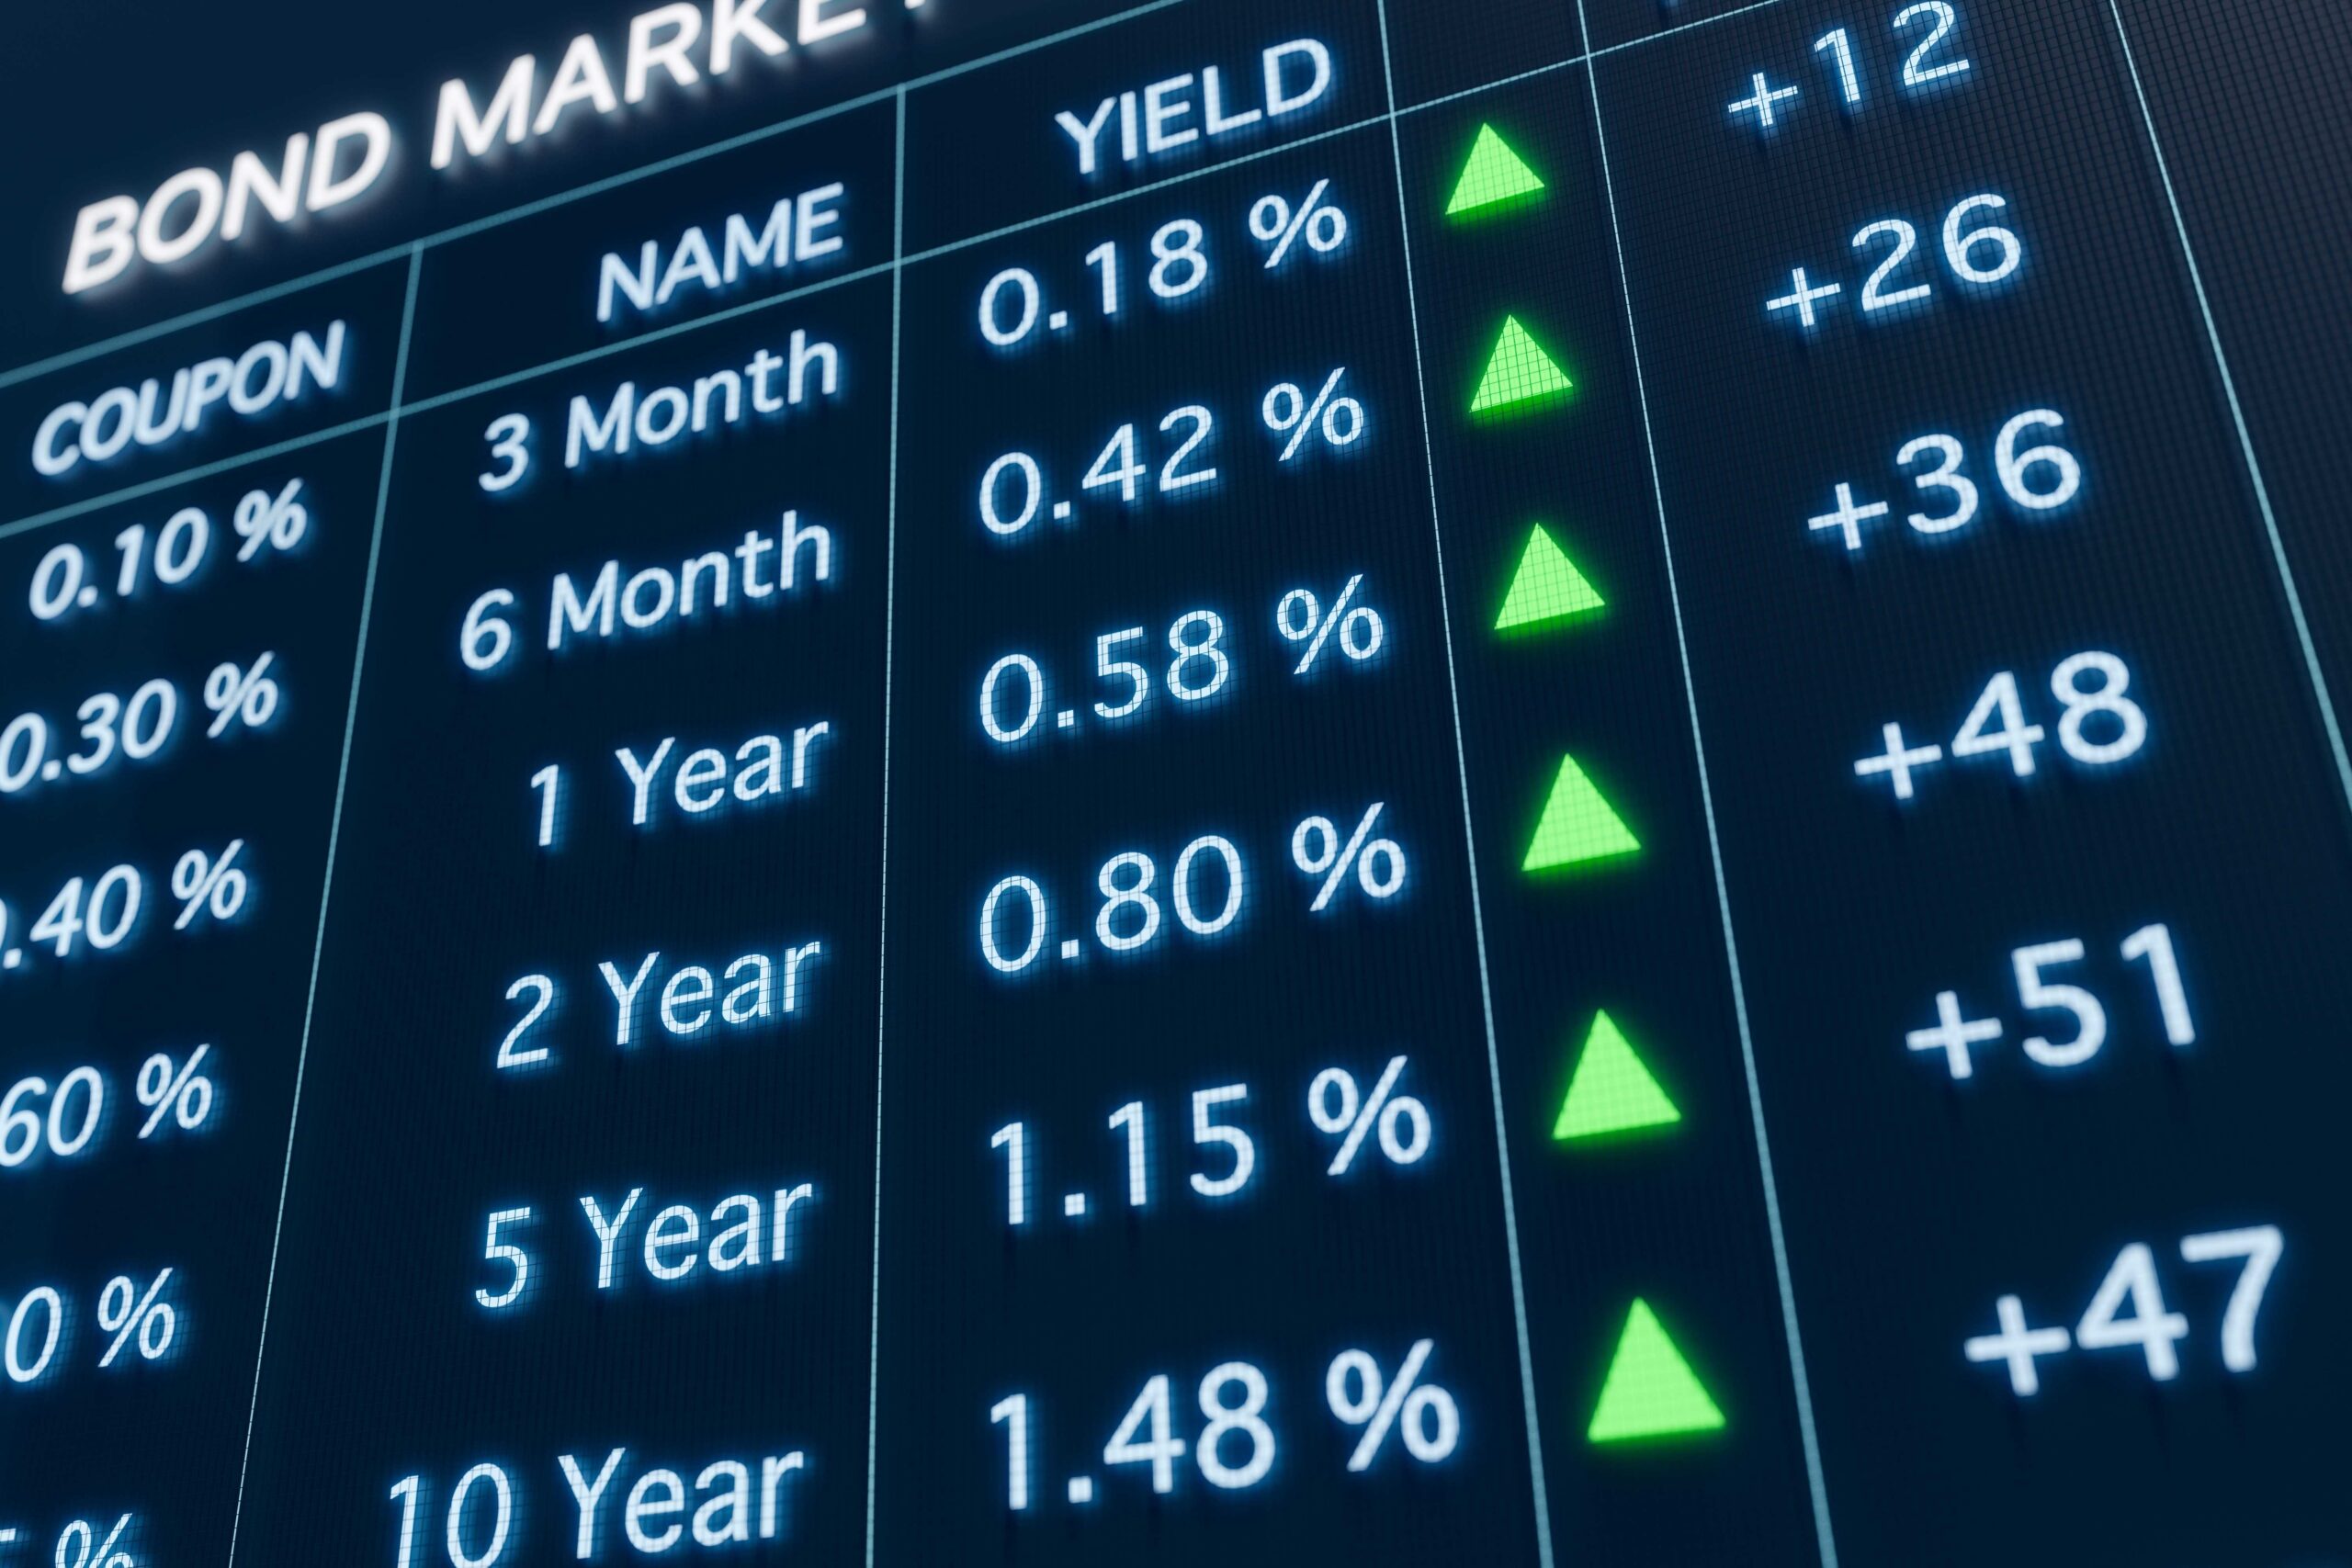 Background illustrating bond market data